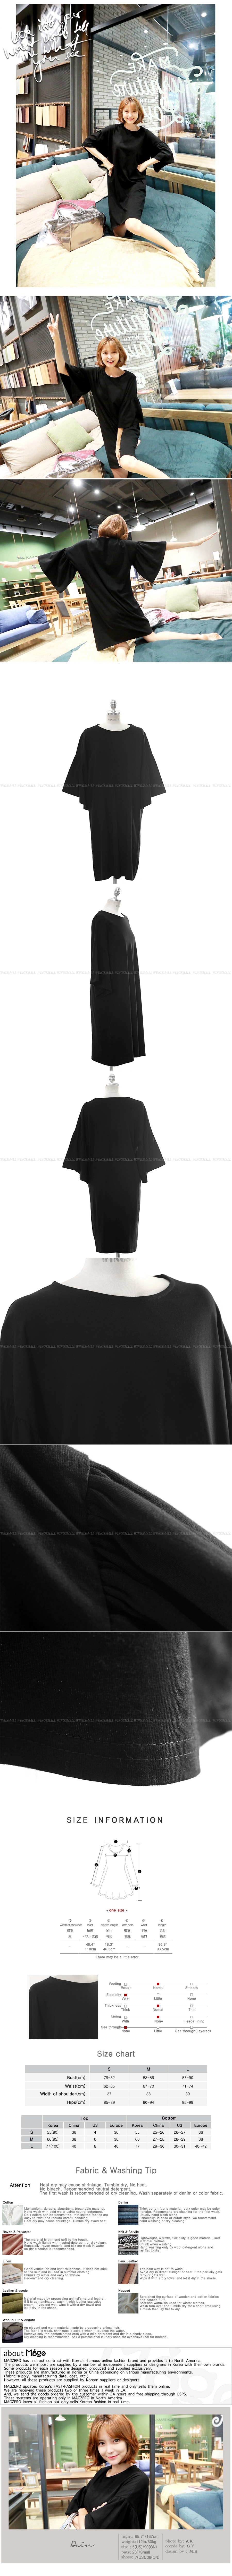 [Autumn New] Ruffle Sleeve Dress #Black One Size(Free)